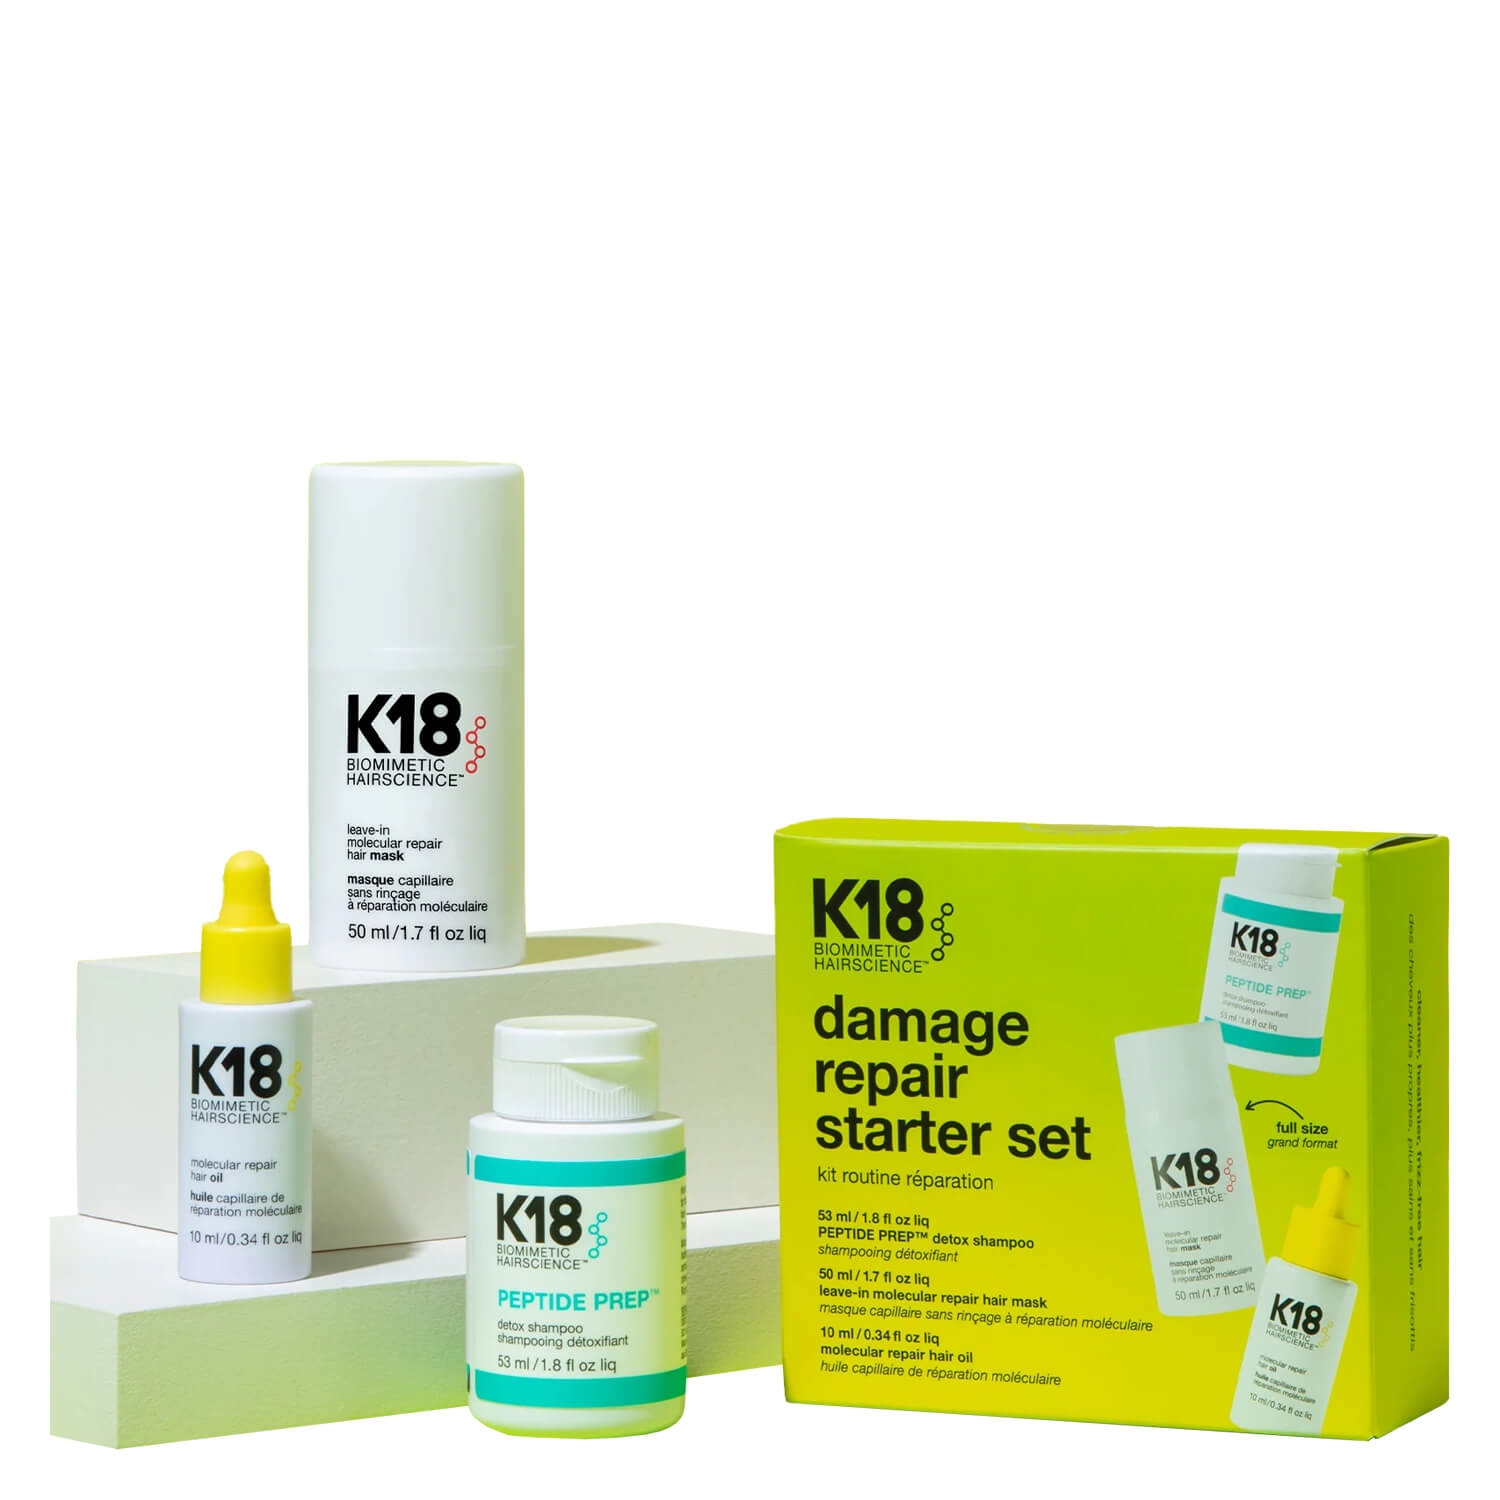 Image du produit de K18 Biomimetic Hairscience - damage repair starter set